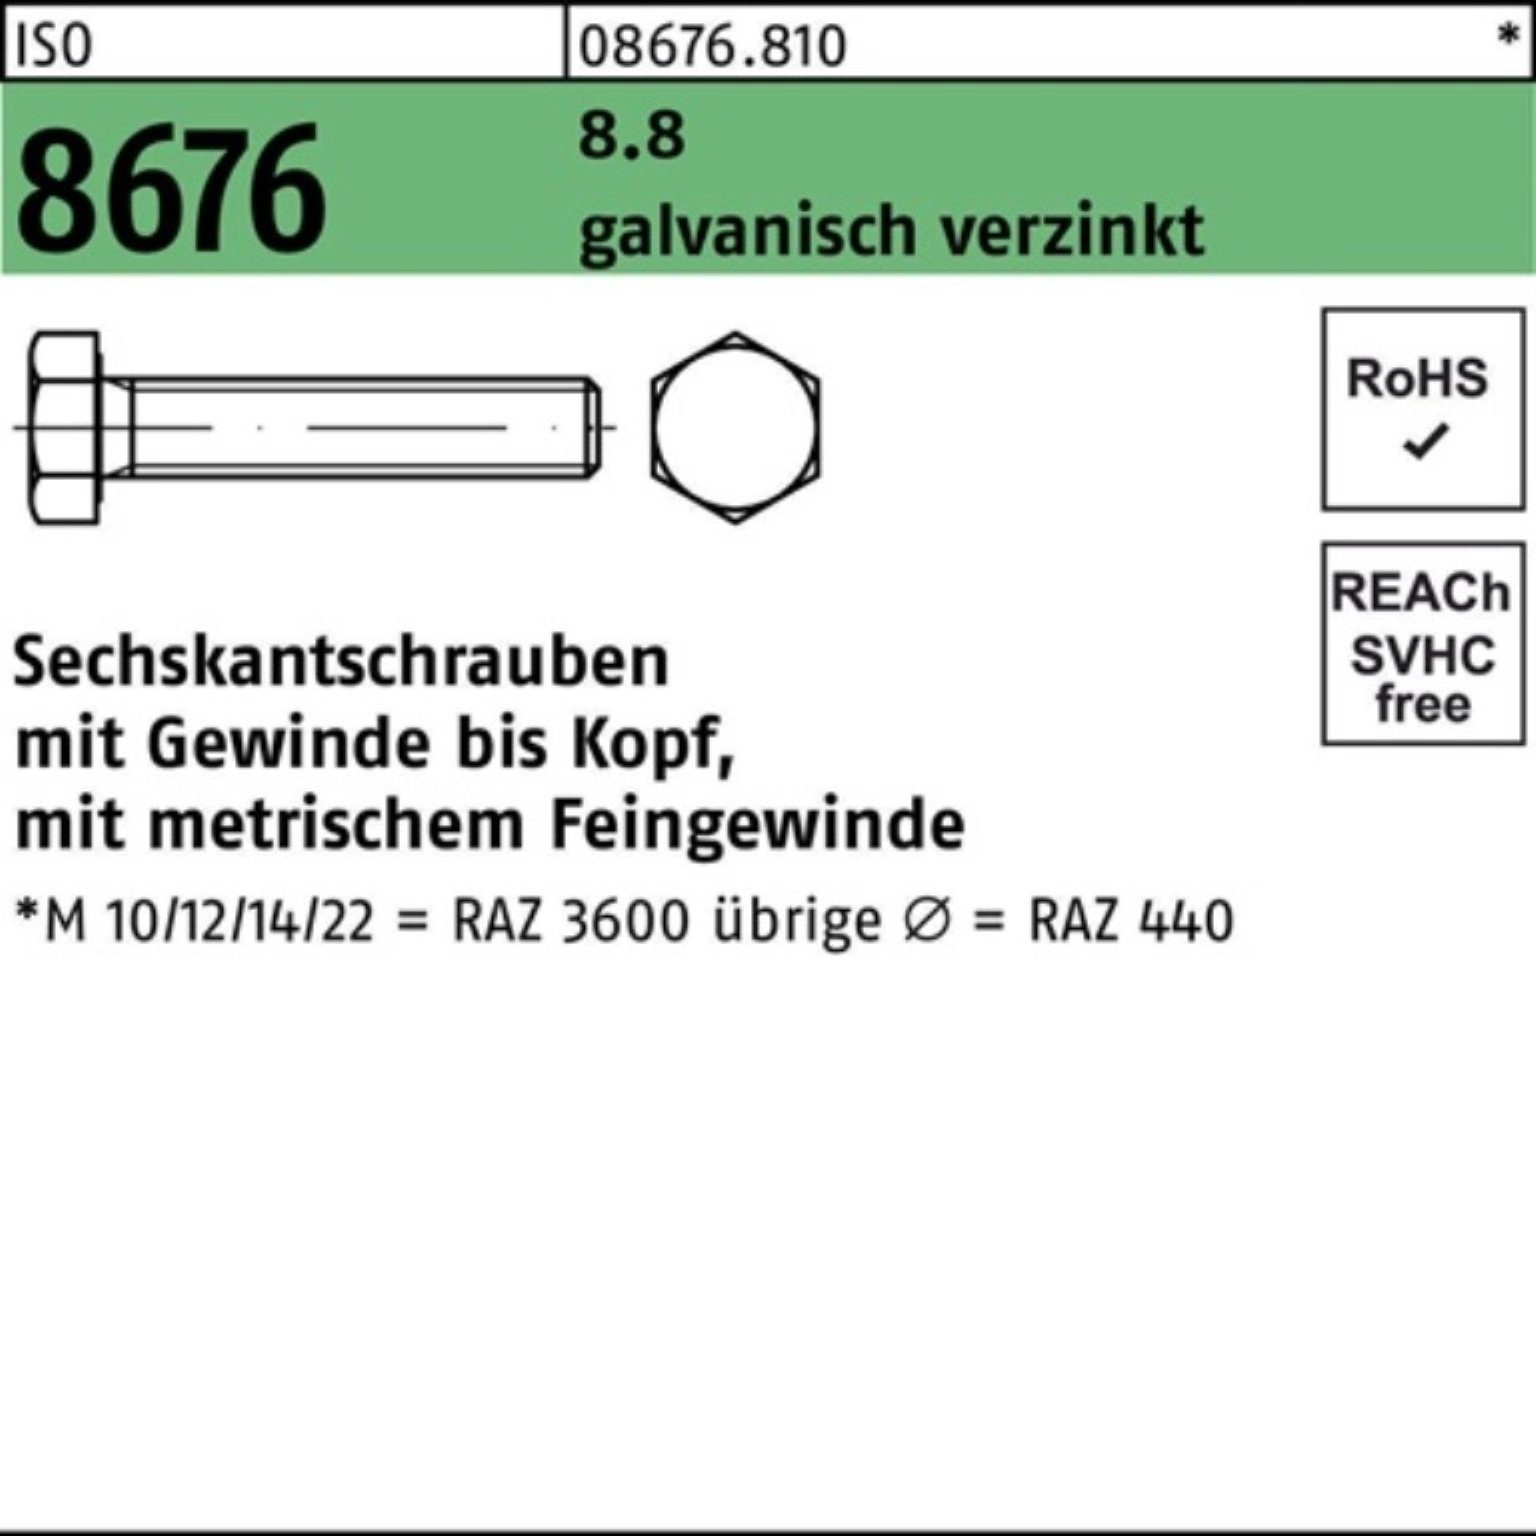 Sechskantschraube VG 50 100er Sechskantschraube 8.8 ISO galv.verz. M20x1,5x Reyher Pack 8676 35